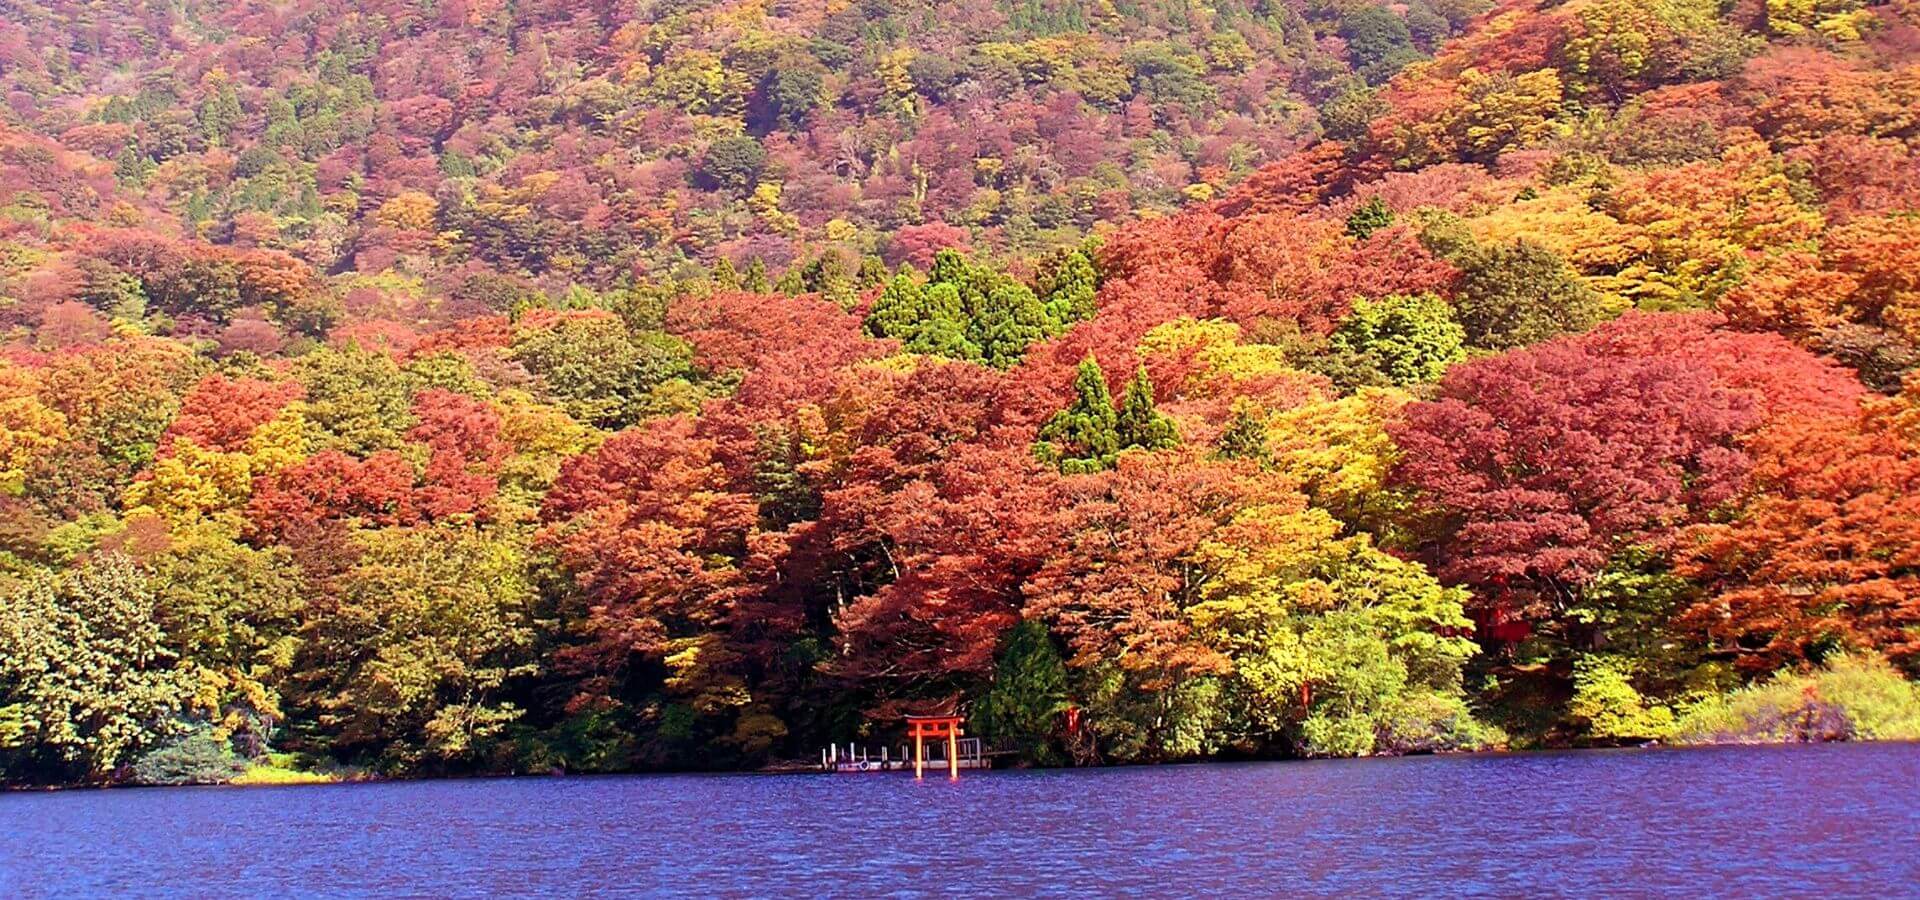 The forest of Hakone Kuzuryu no Mori